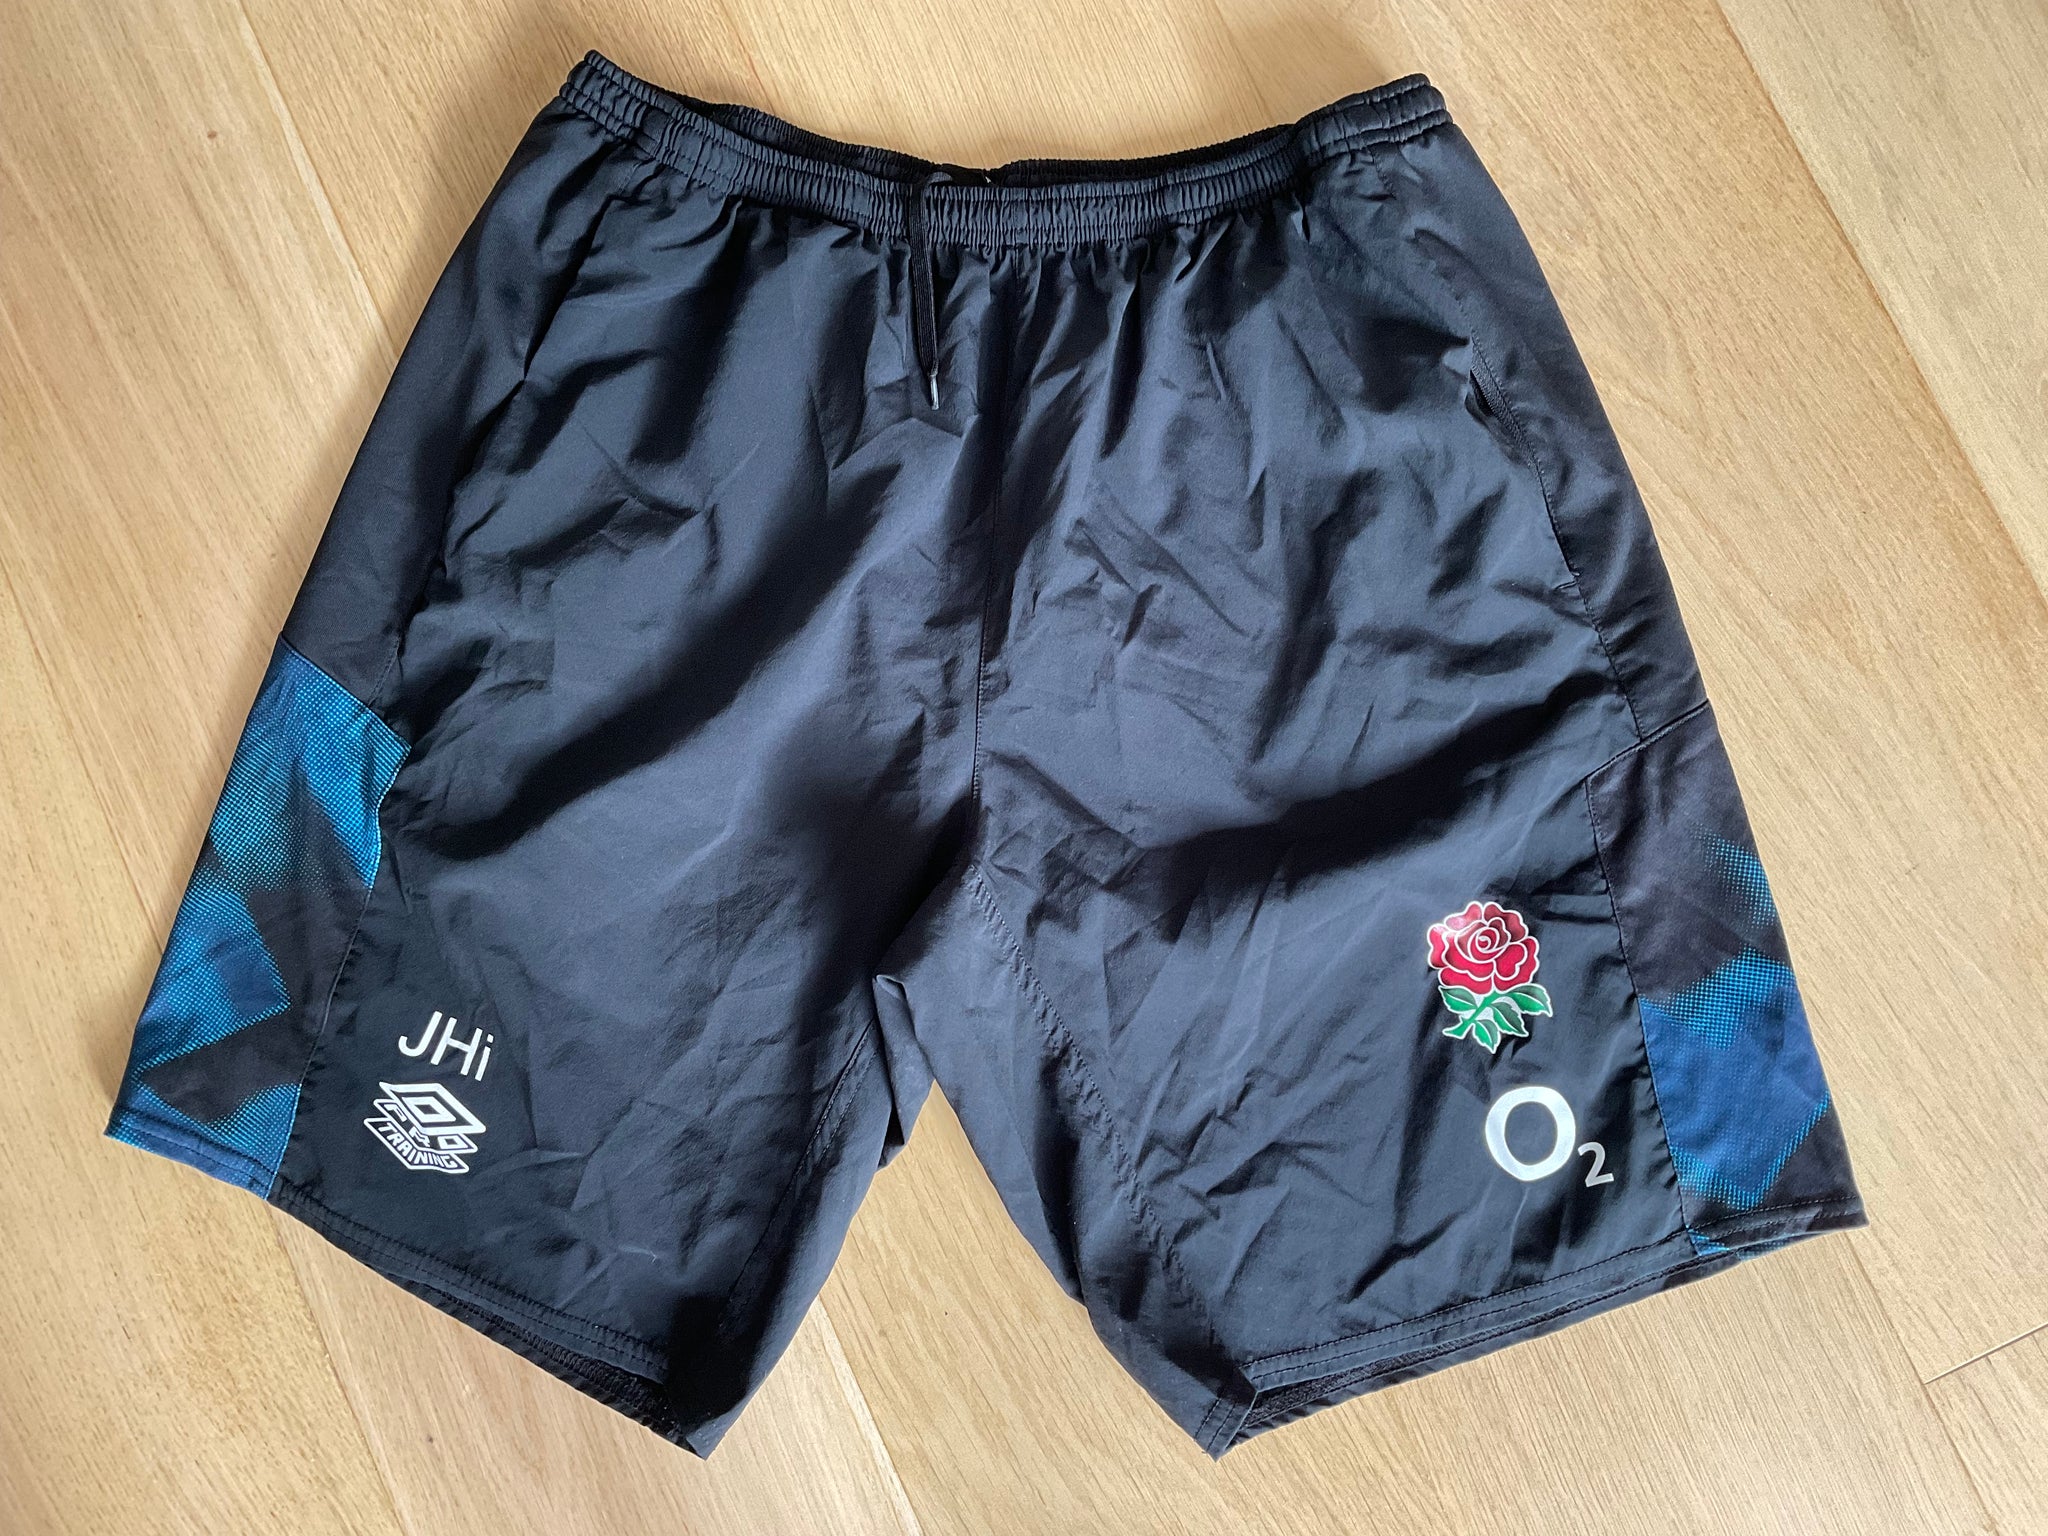 Jonny Hill - England Rugby Gym Shorts  [Black & Blue]